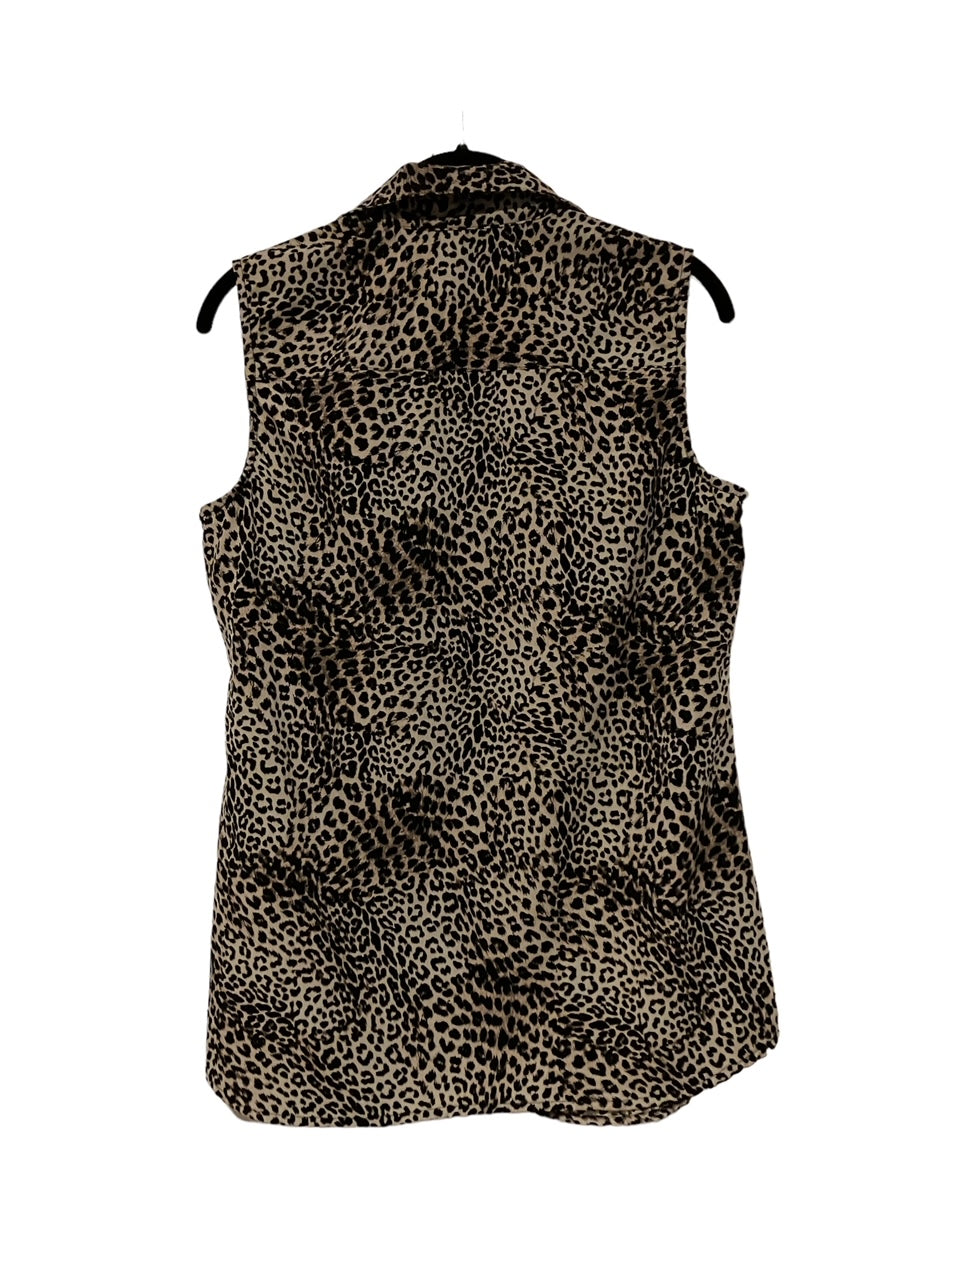 Leopard Print Sleeveless Blouse